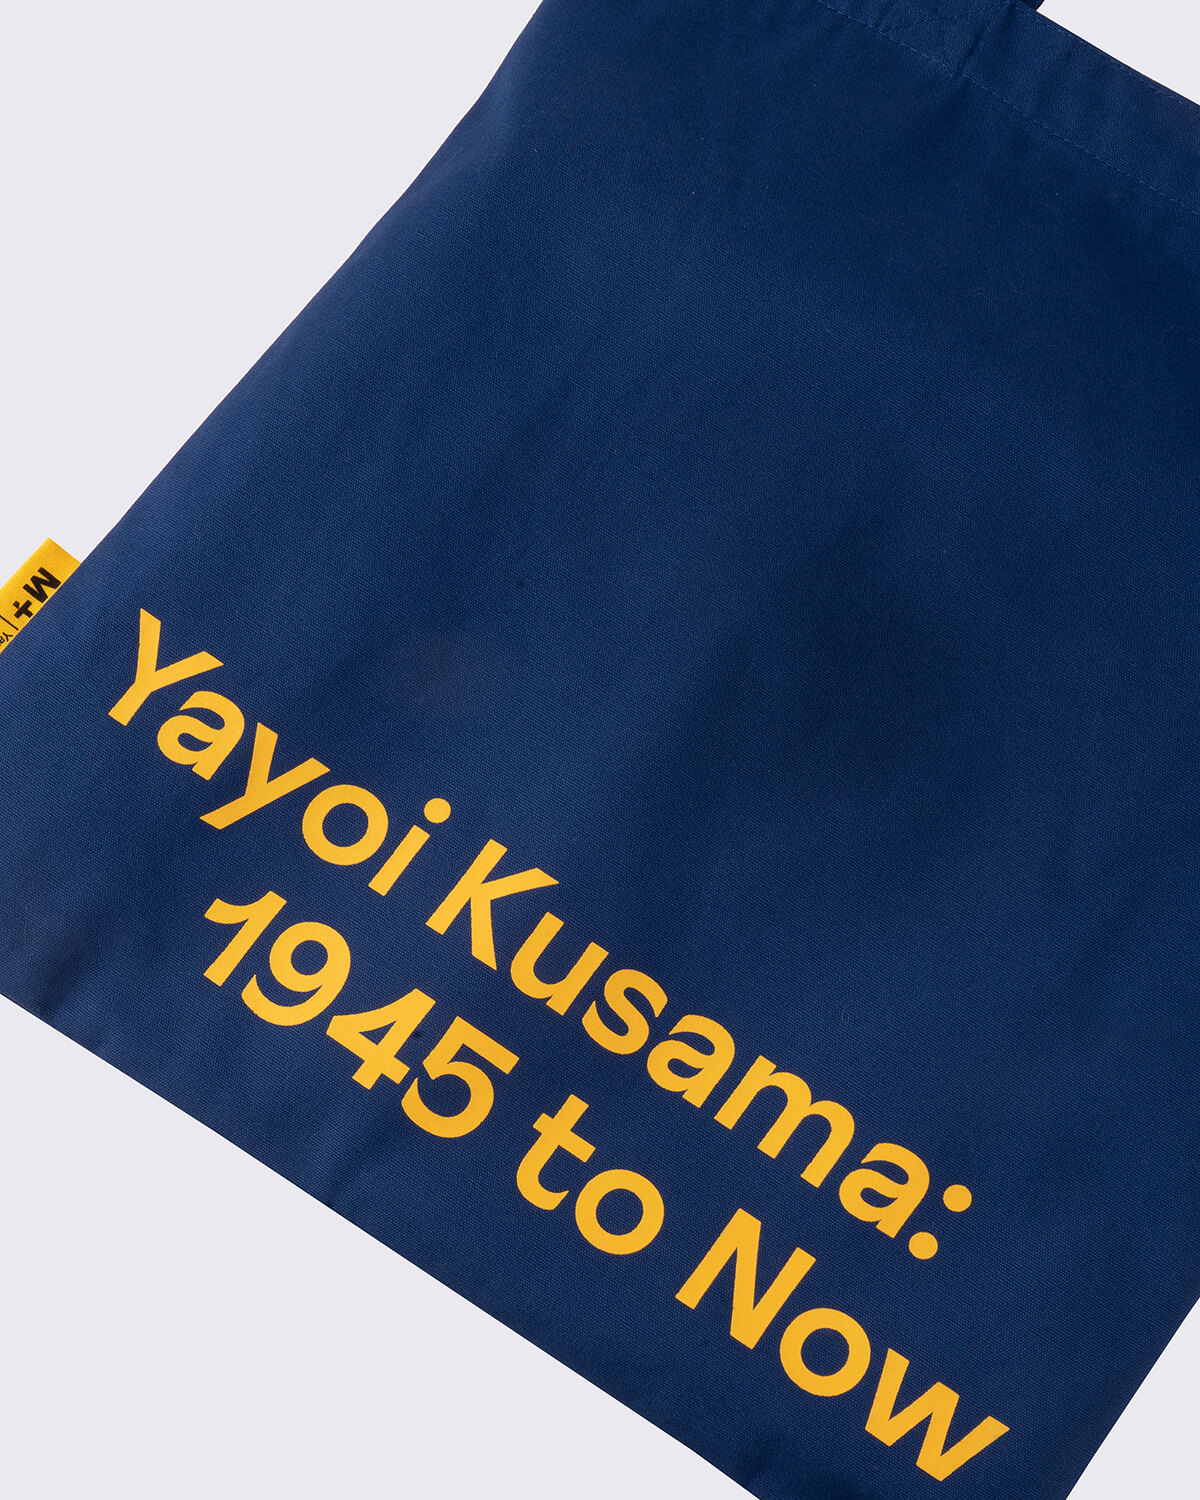 Yayoi Kusama 'My Heart with Many Worries' Tote Bag 